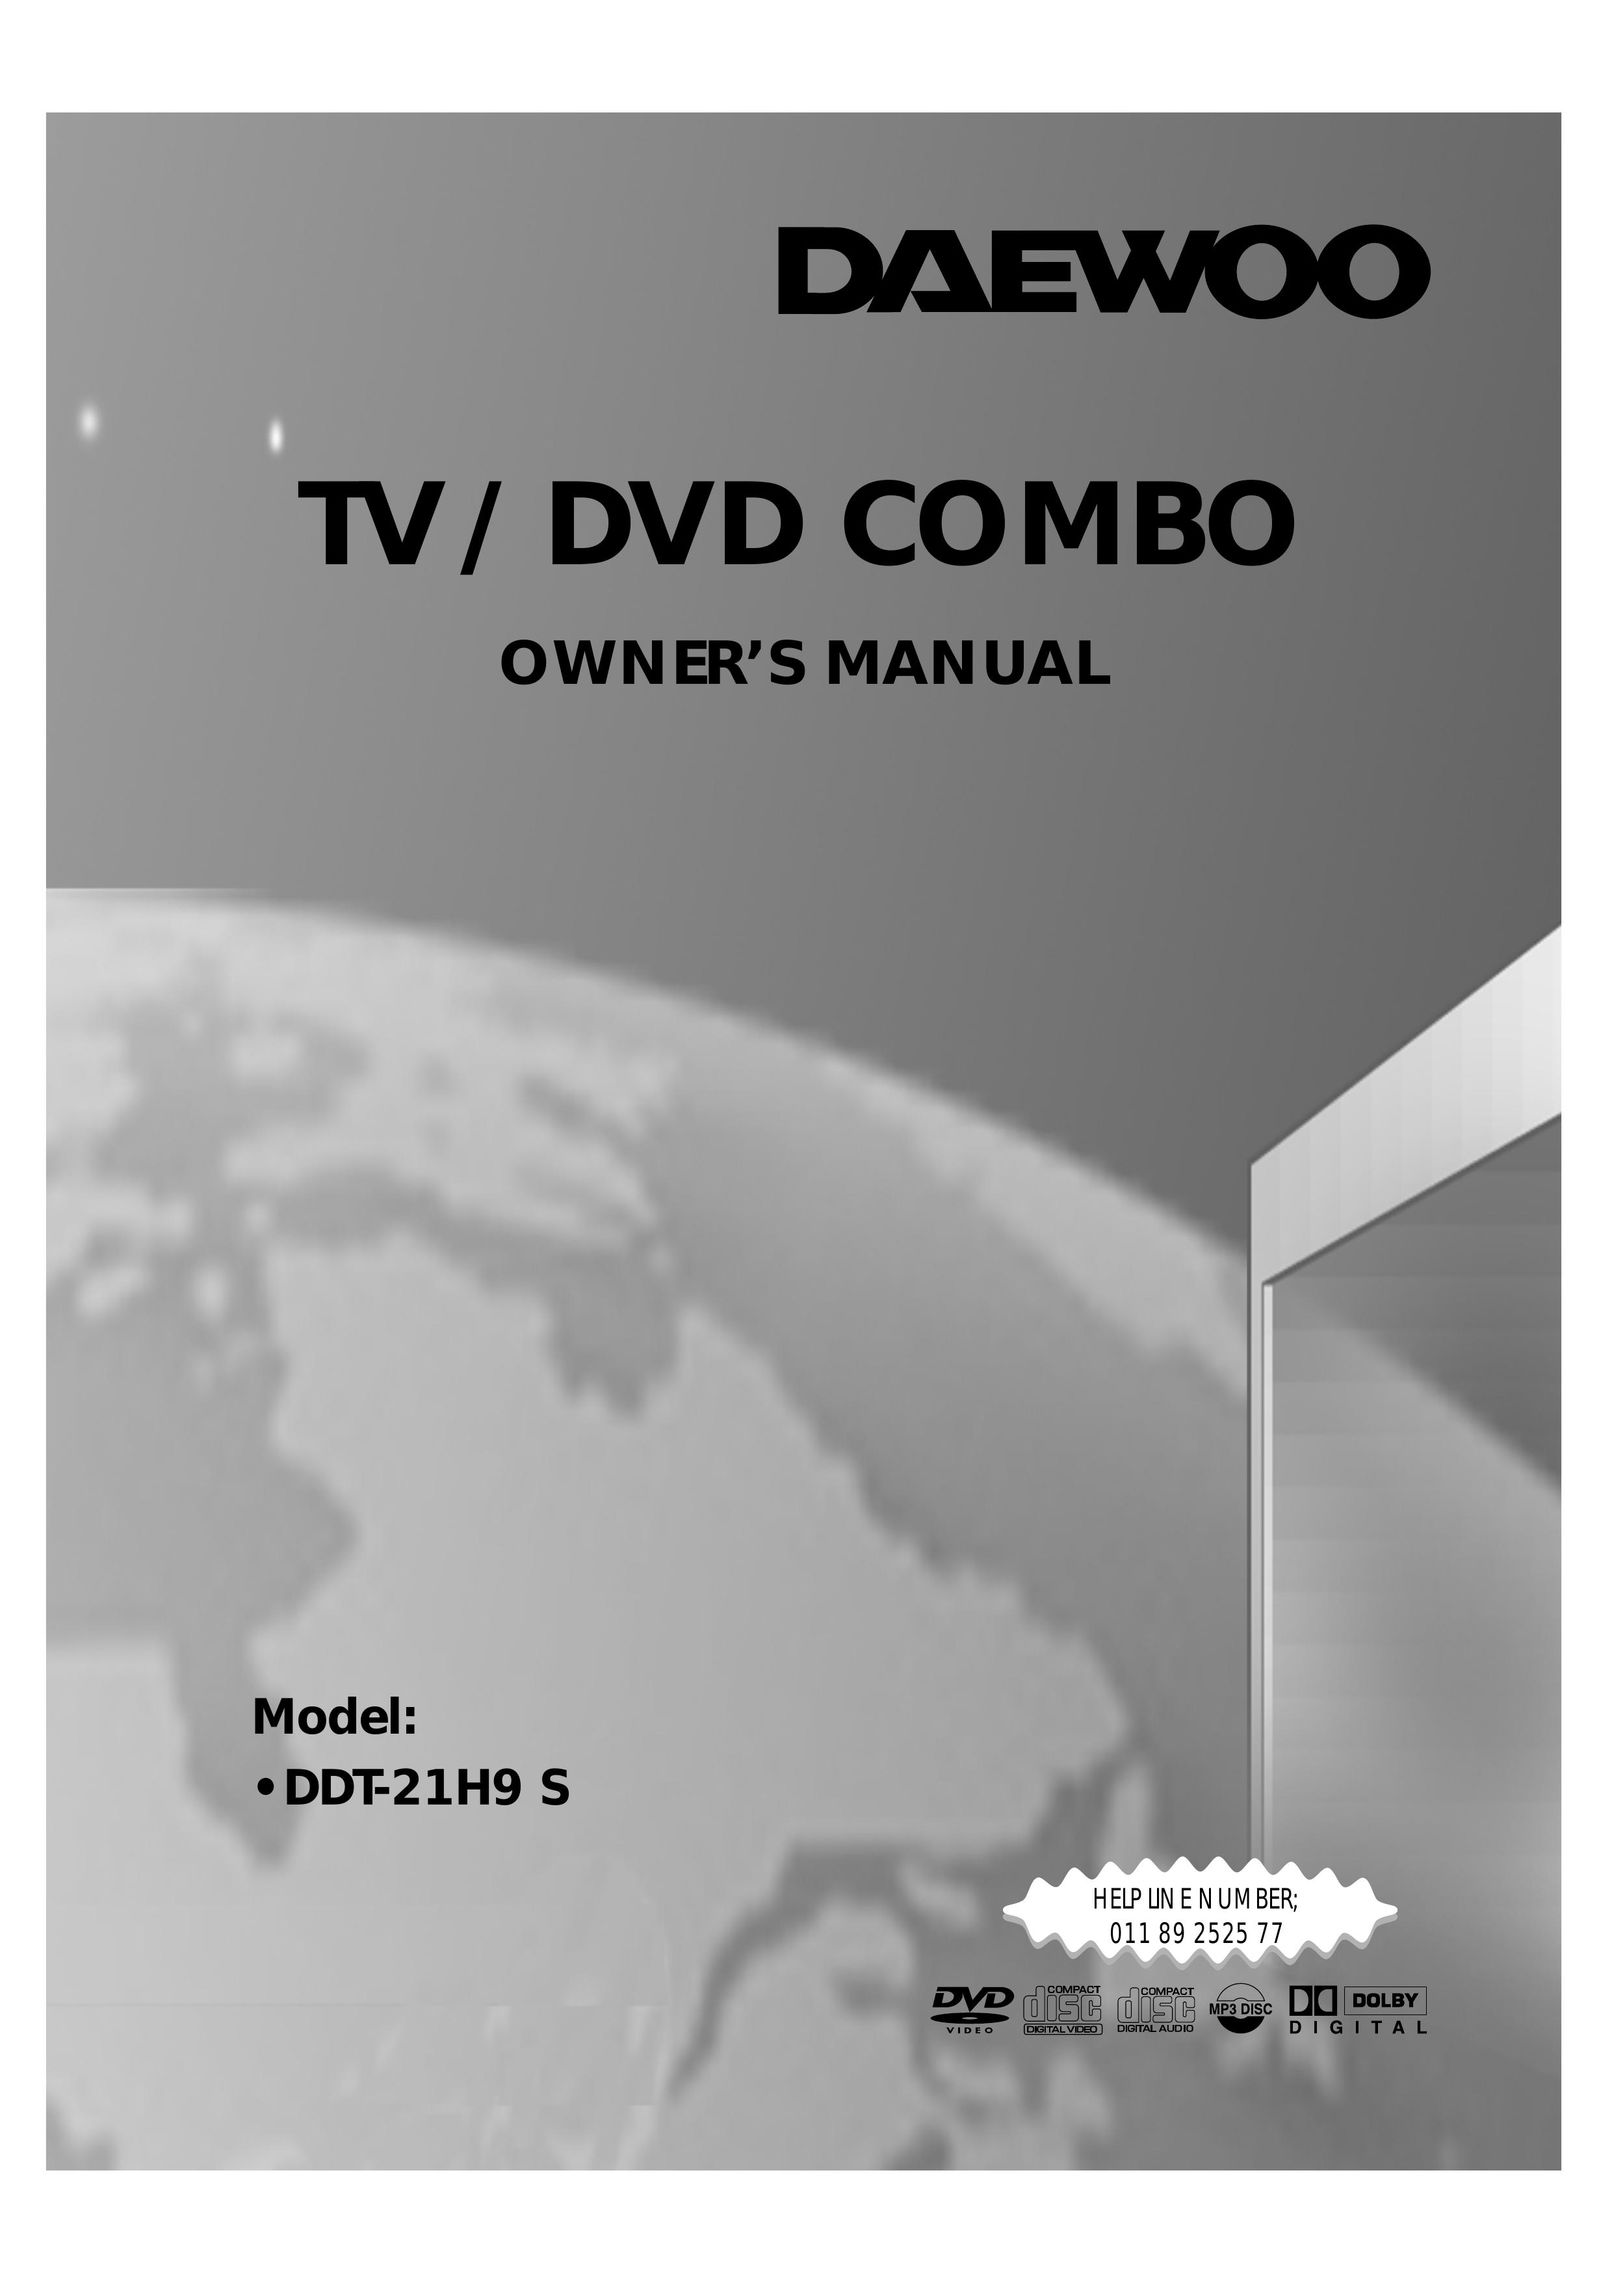 Daewoo DDT-21H9 S TV DVD Combo User Manual